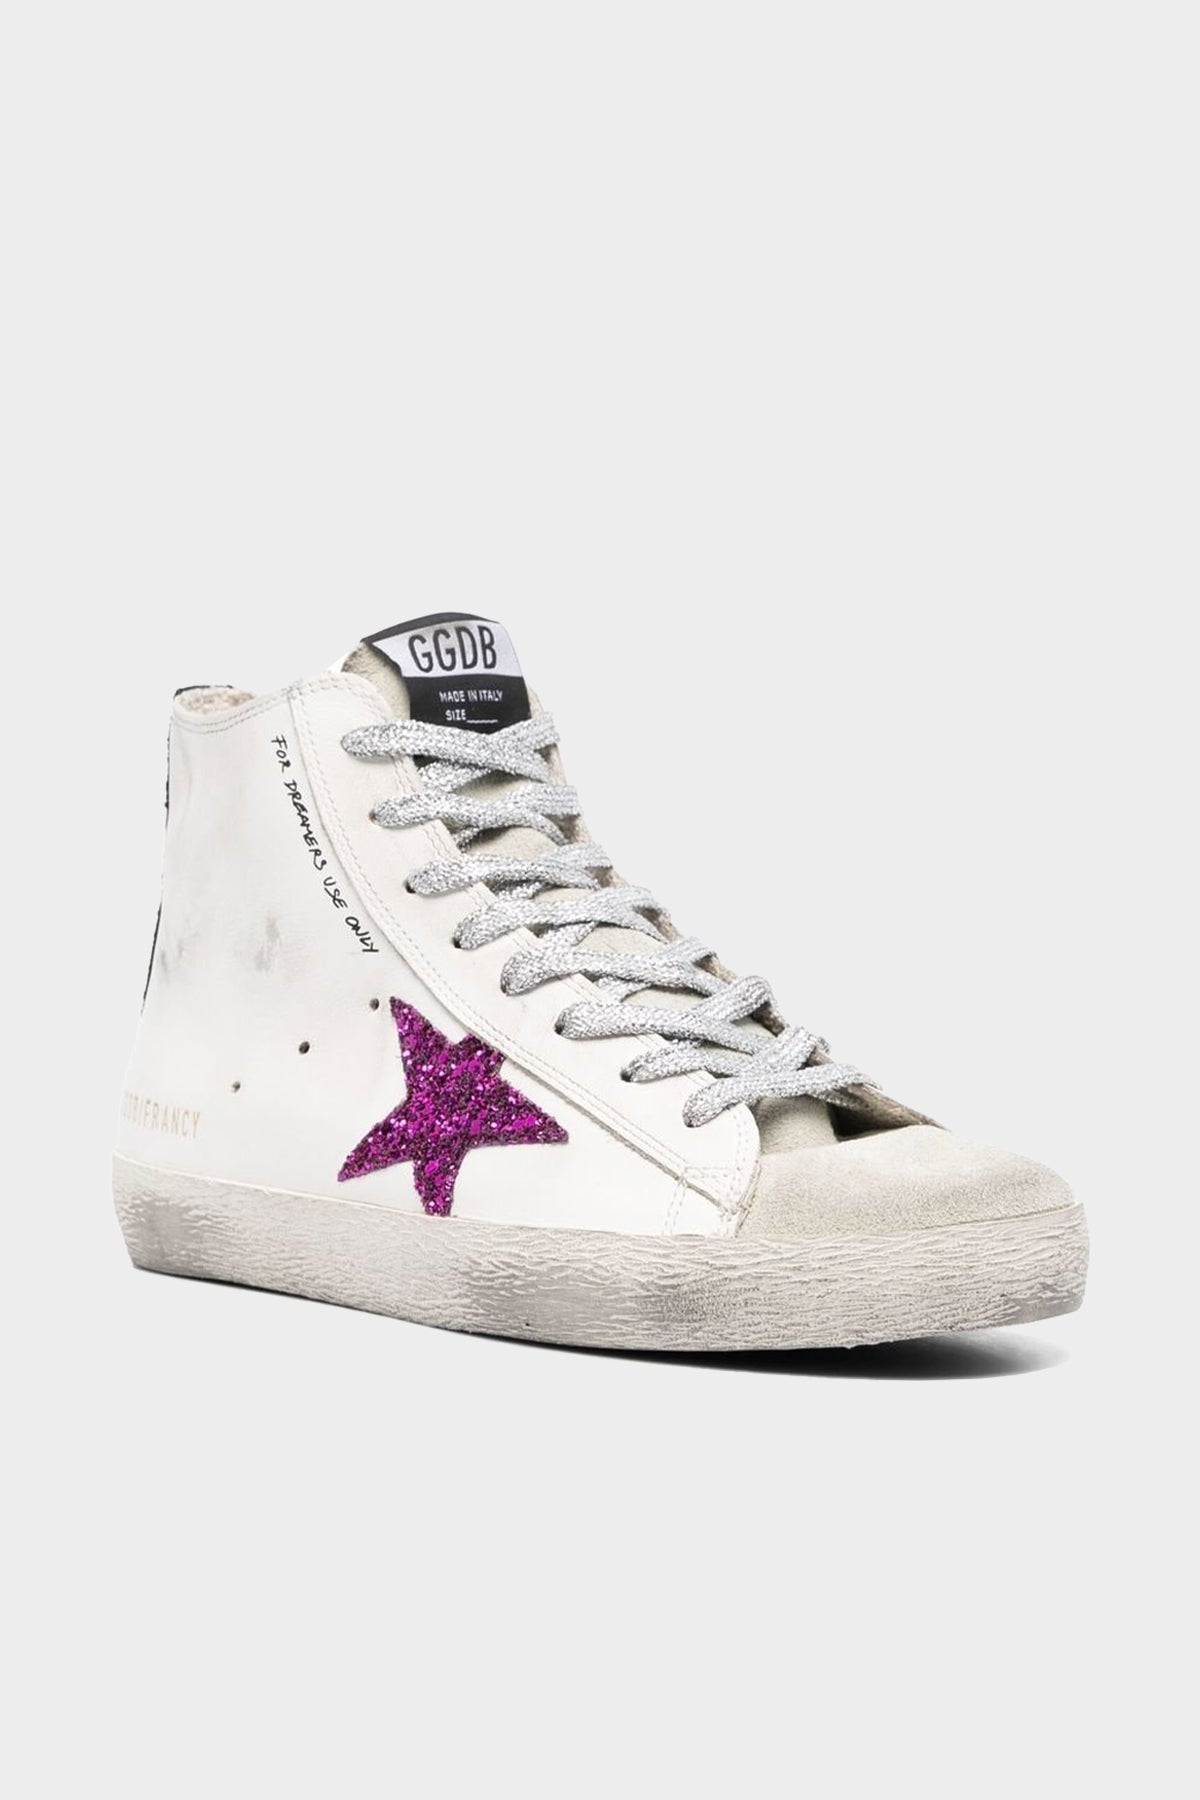 Francy Fucsia Star White Leather Sneaker - shop-olivia.com